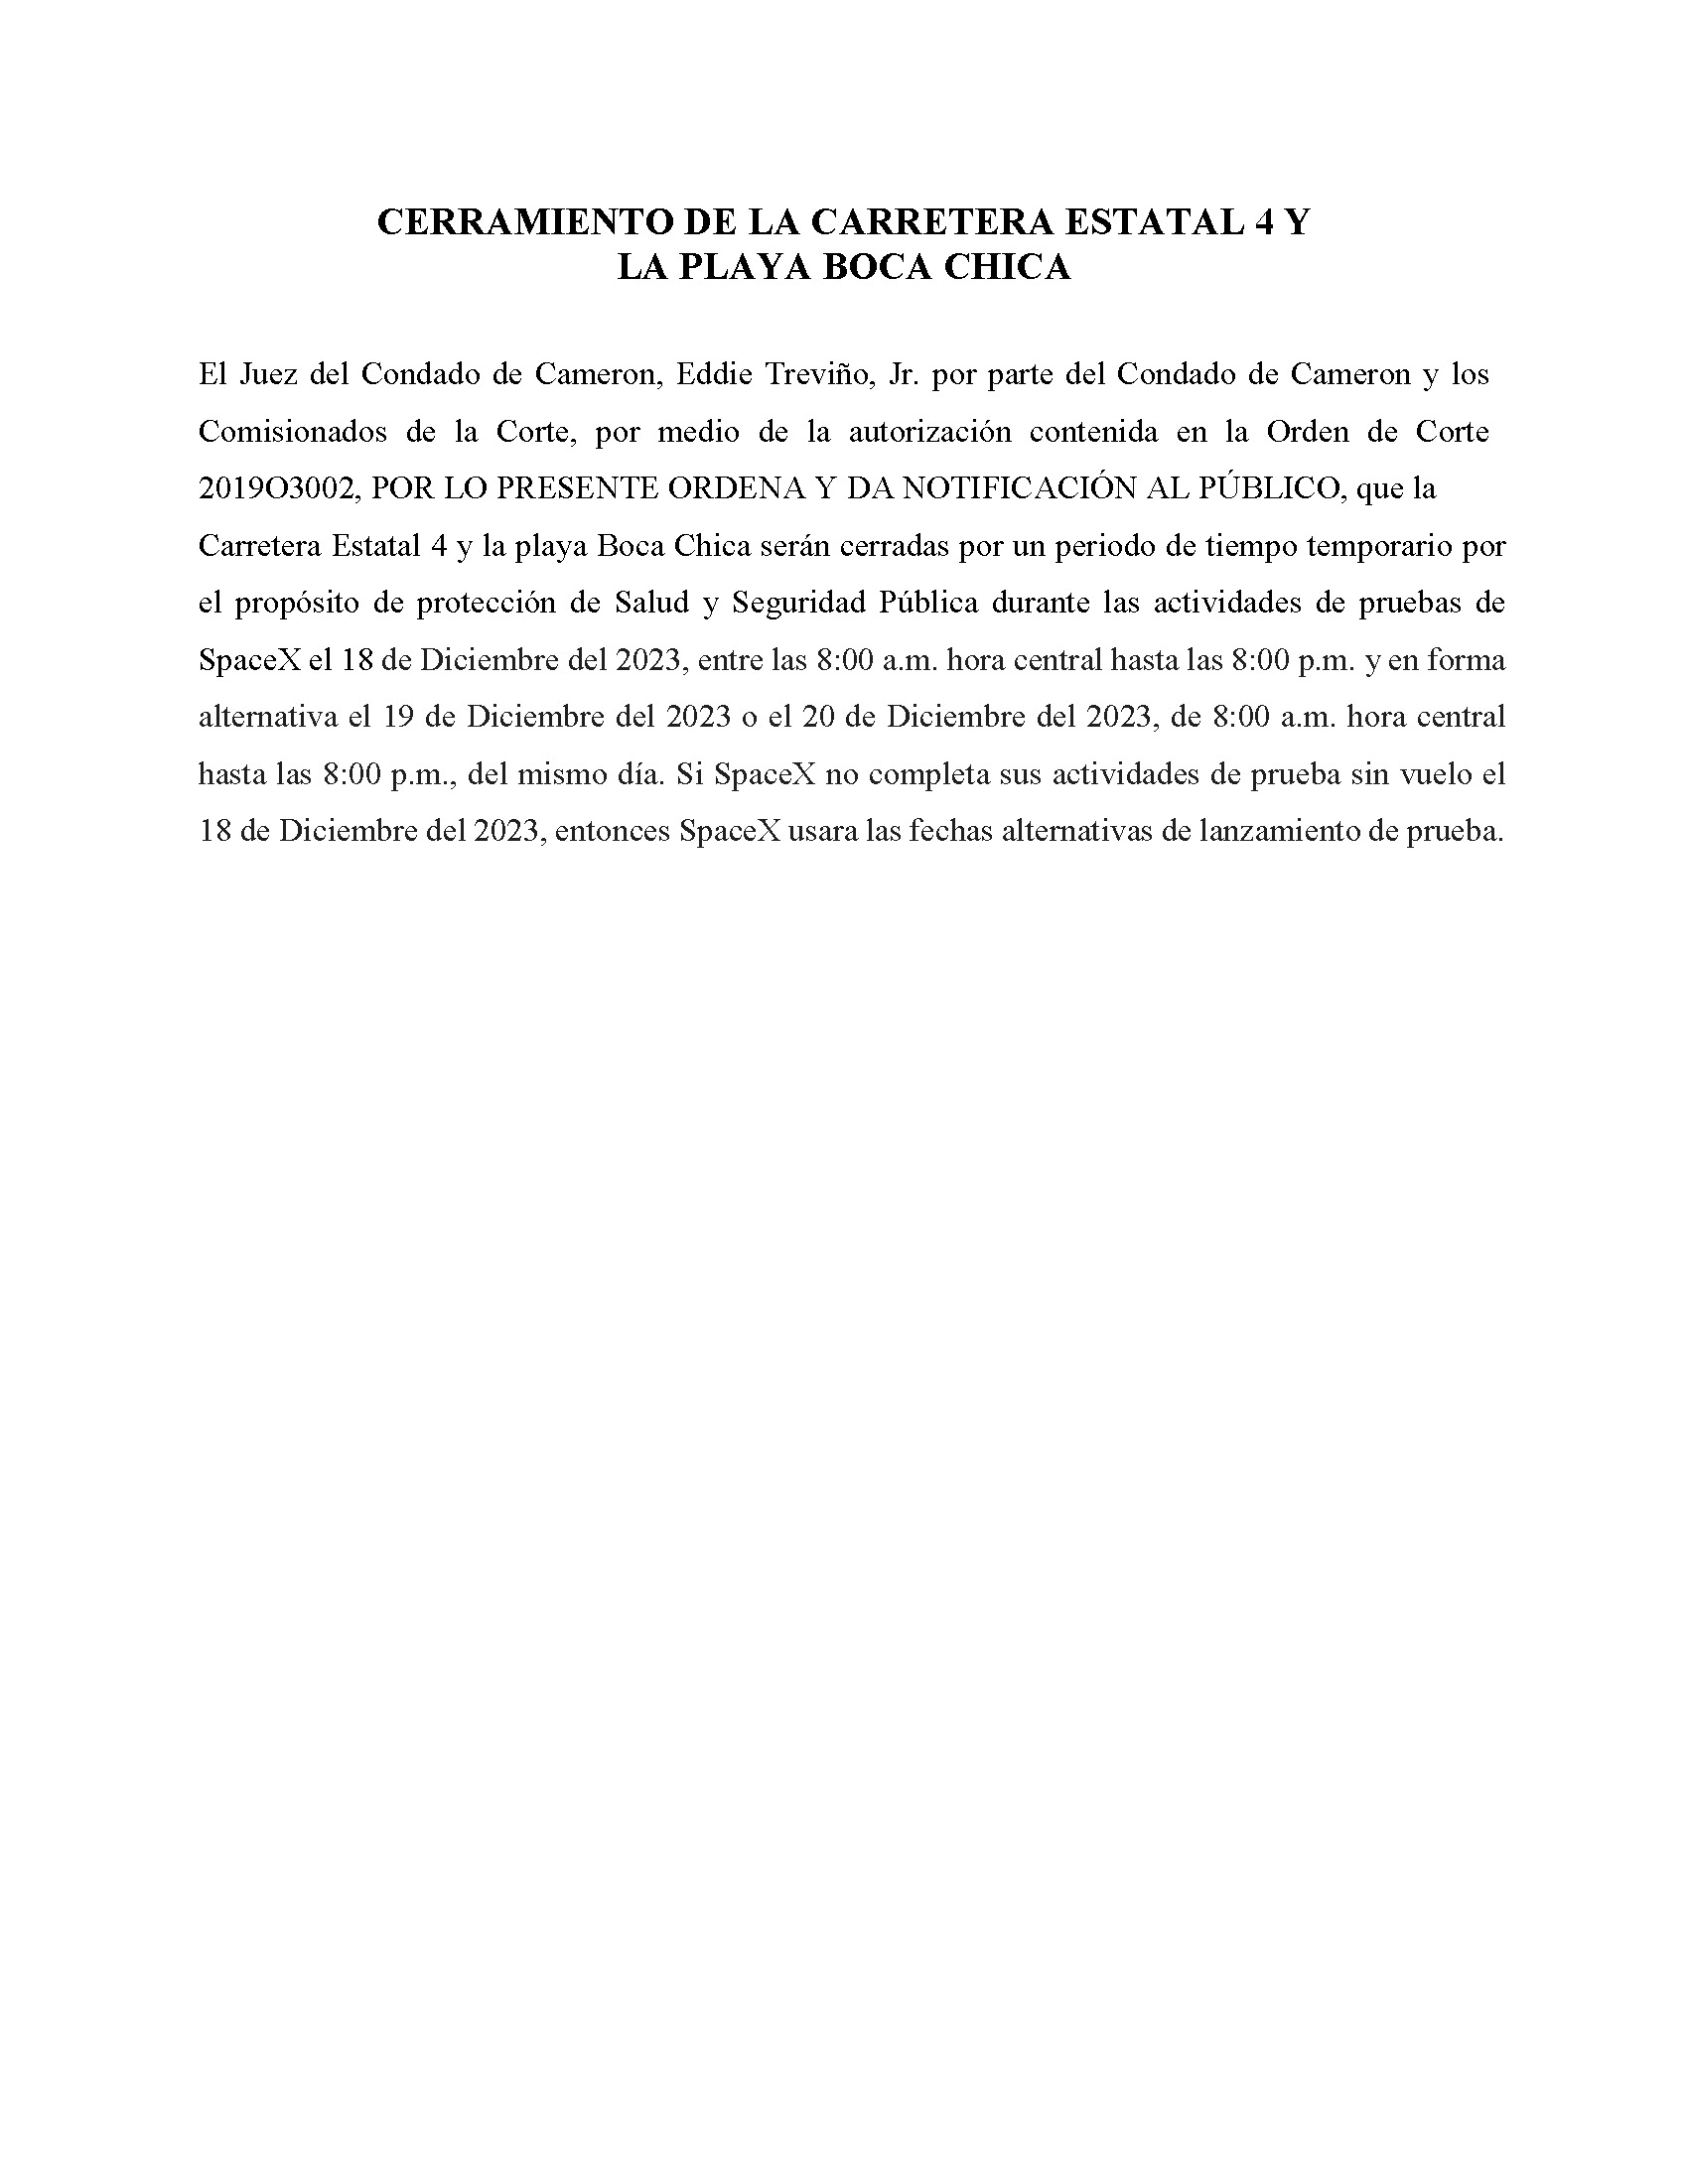 ORDER.CLOSURE OF HIGHWAY 4 Y LA PLAYA BOCA CHICA.SPANISH.12.18.23